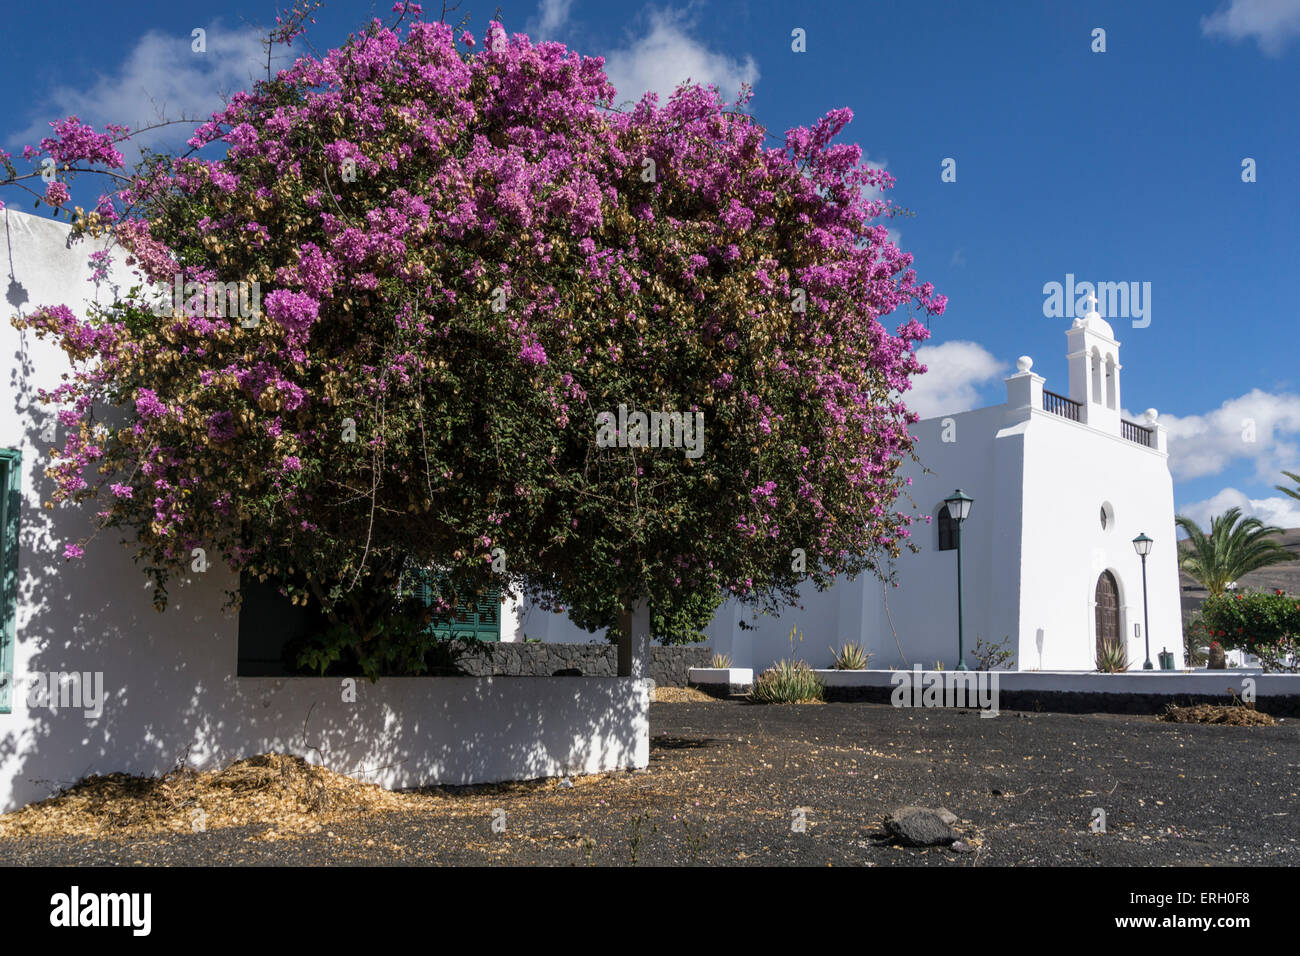 Village Church, Uga, Lanzarote, Canary Islands, Spain Stock Photo